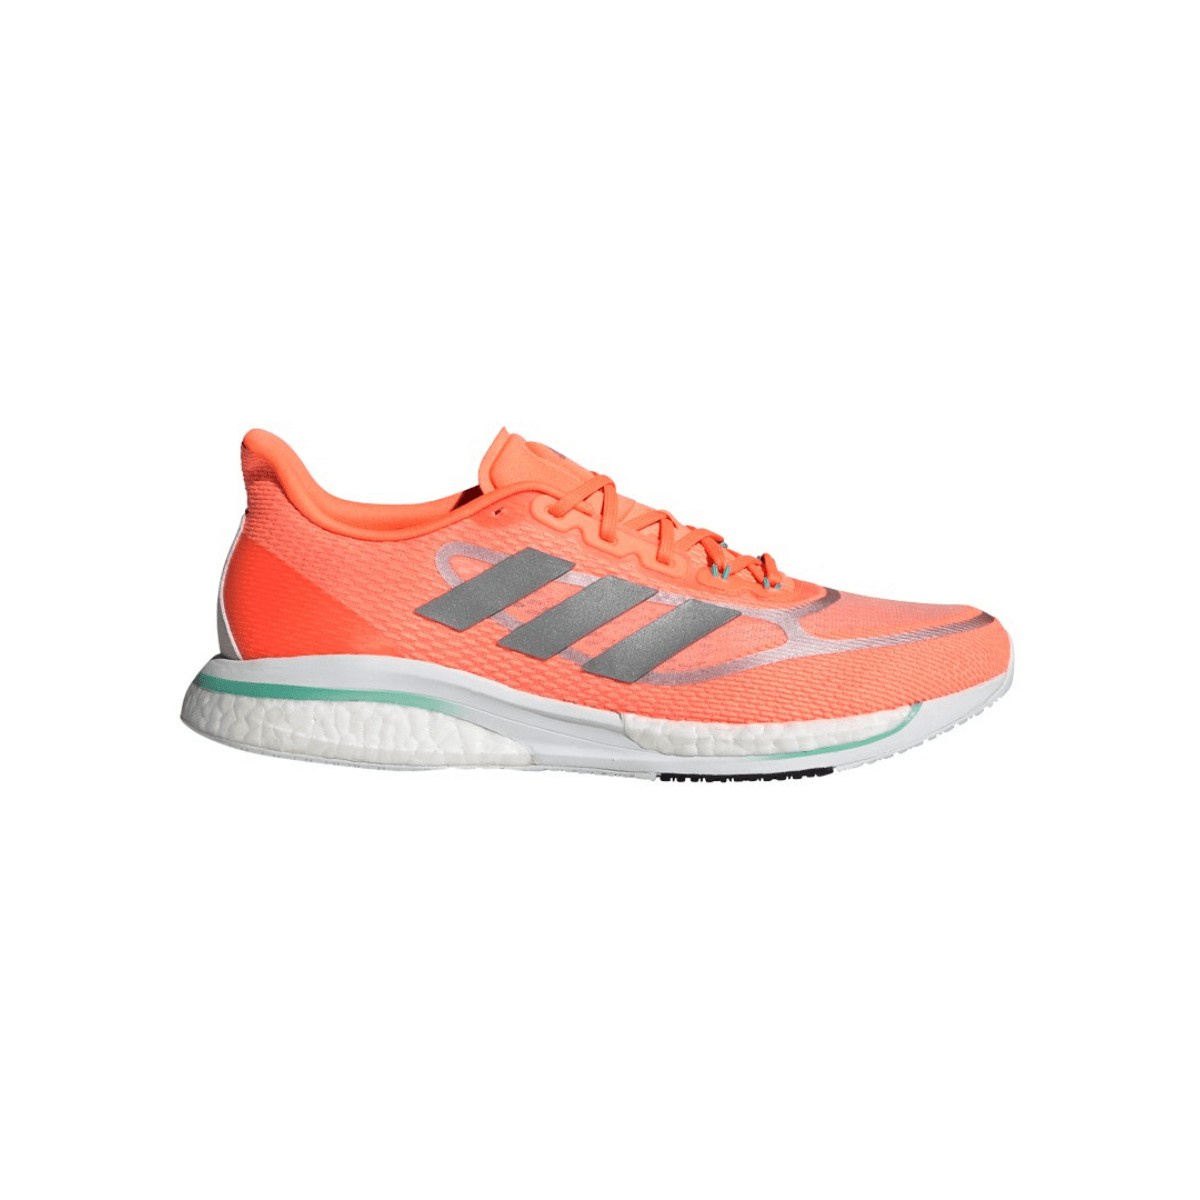 Adidas Supernova + Running Shoes Orange